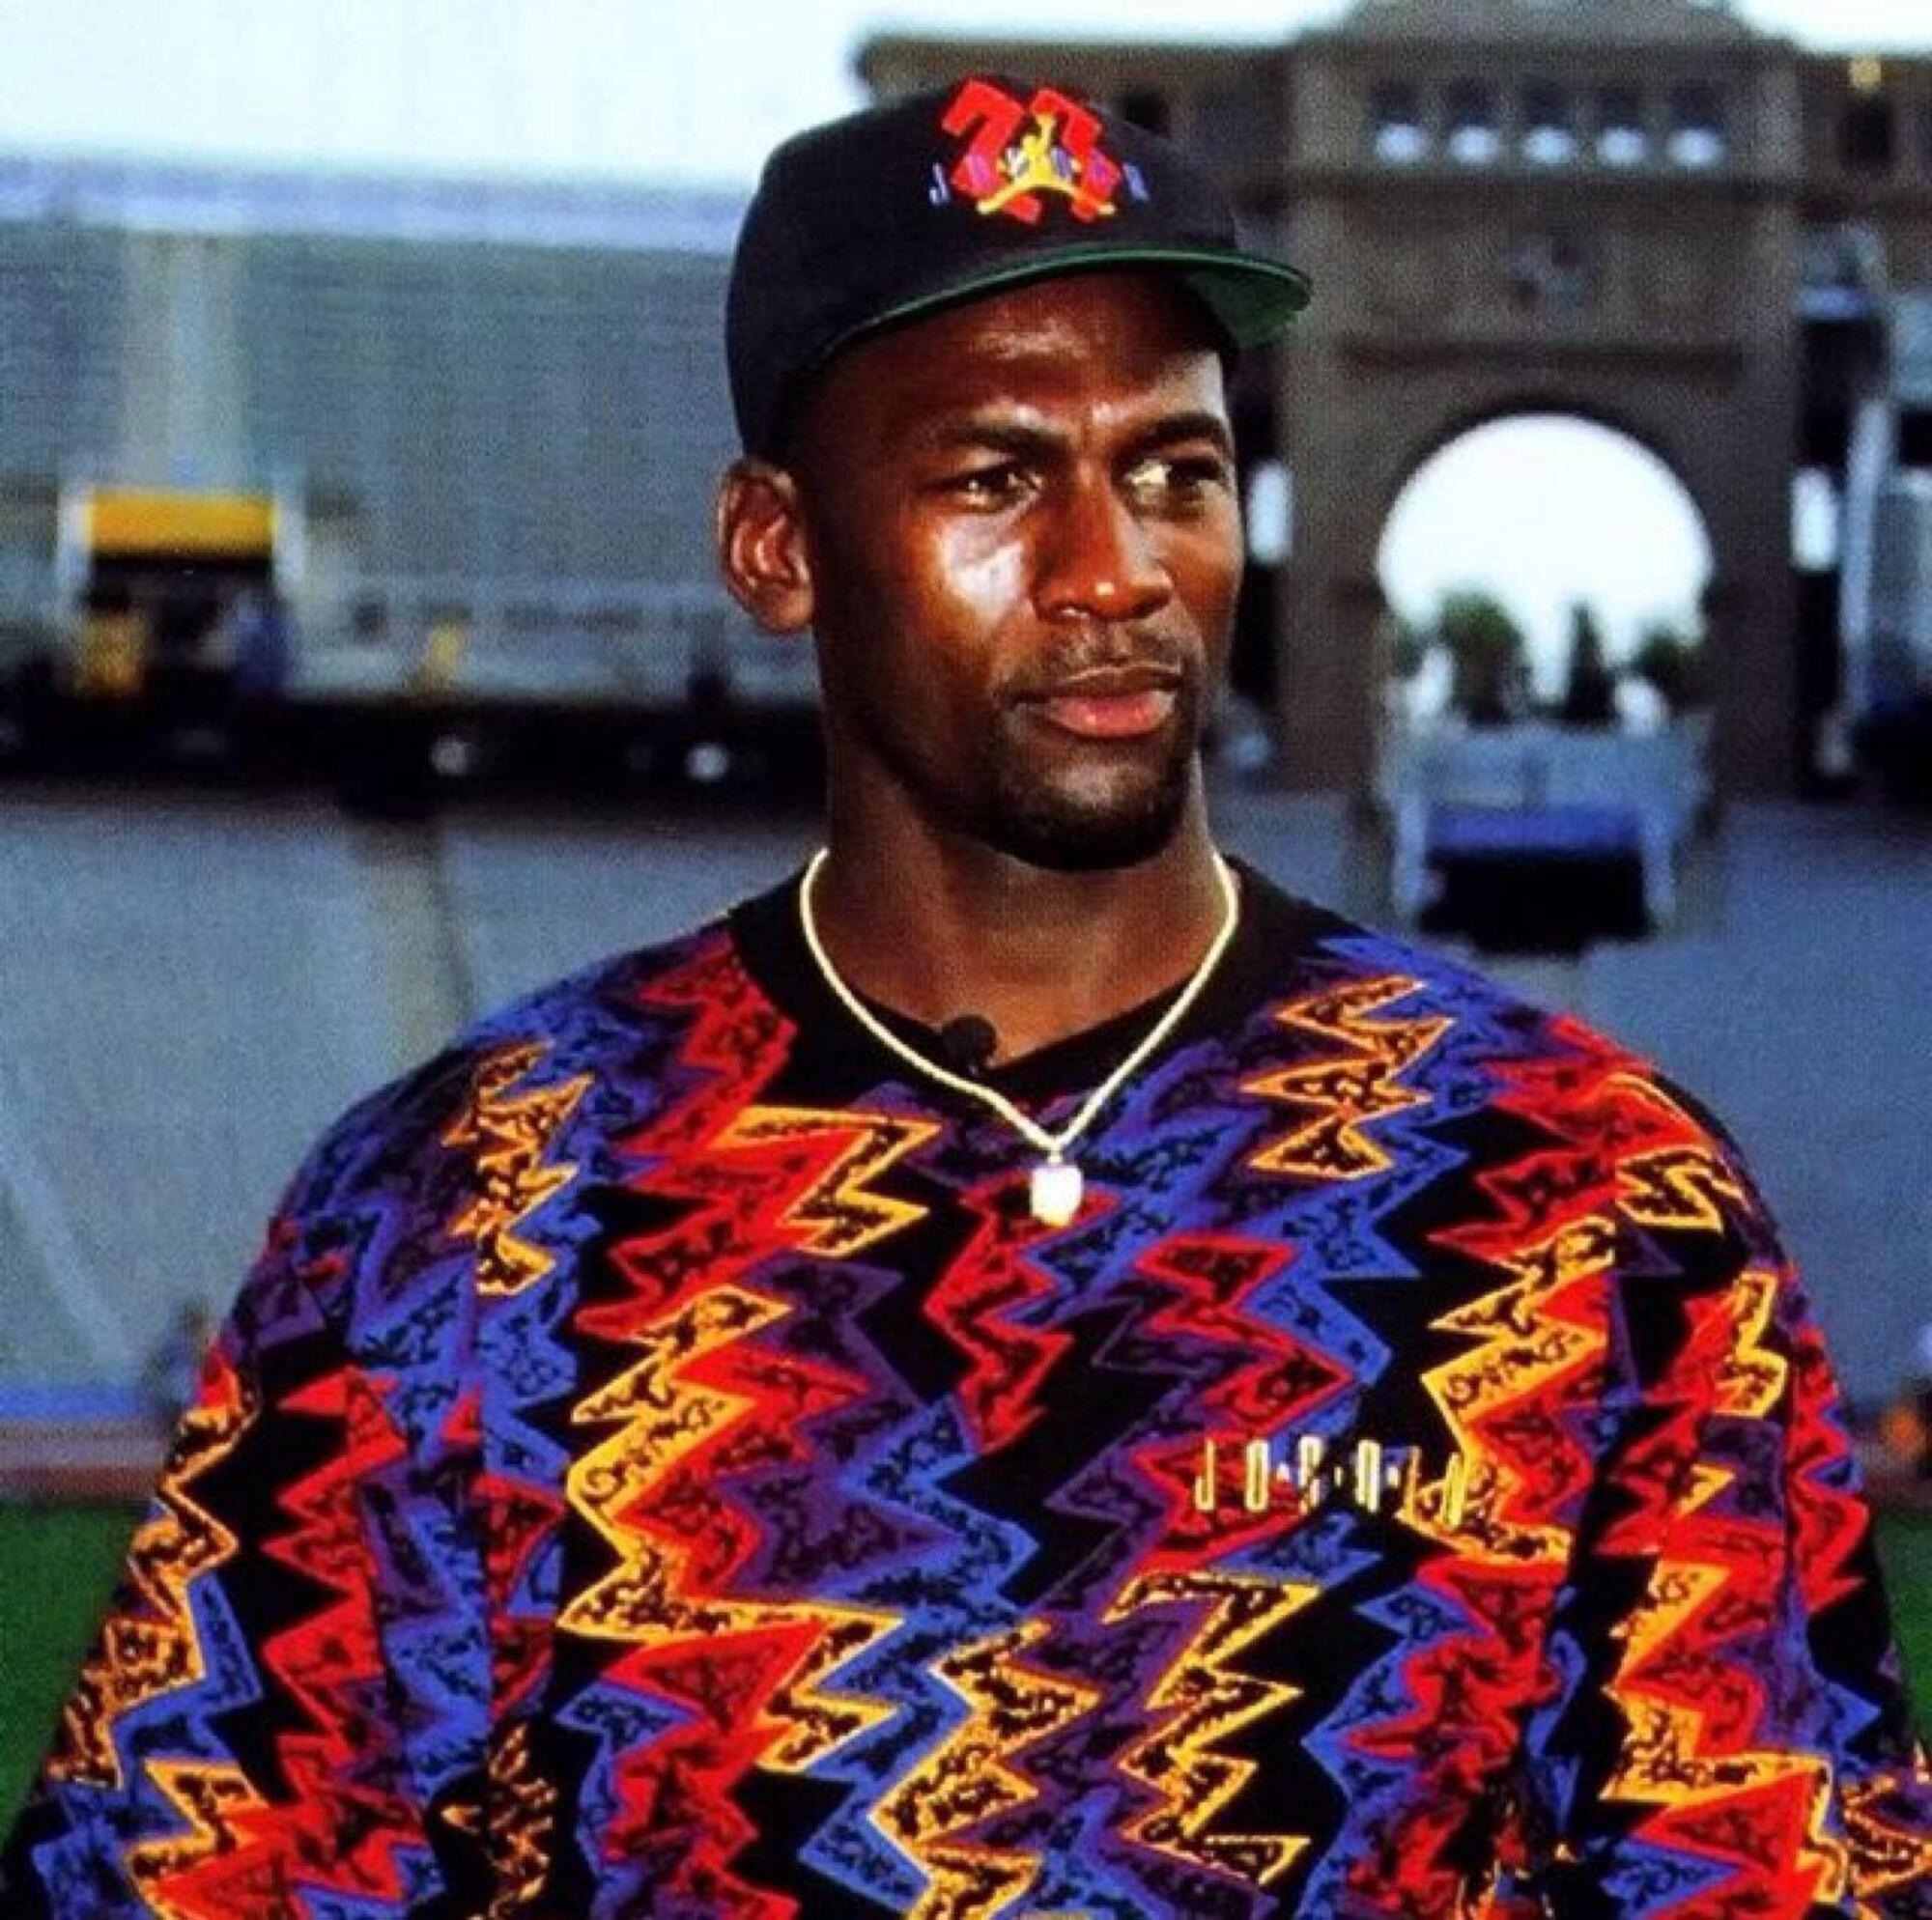 Michael Jordan stadio olimpico Barcellona 1992